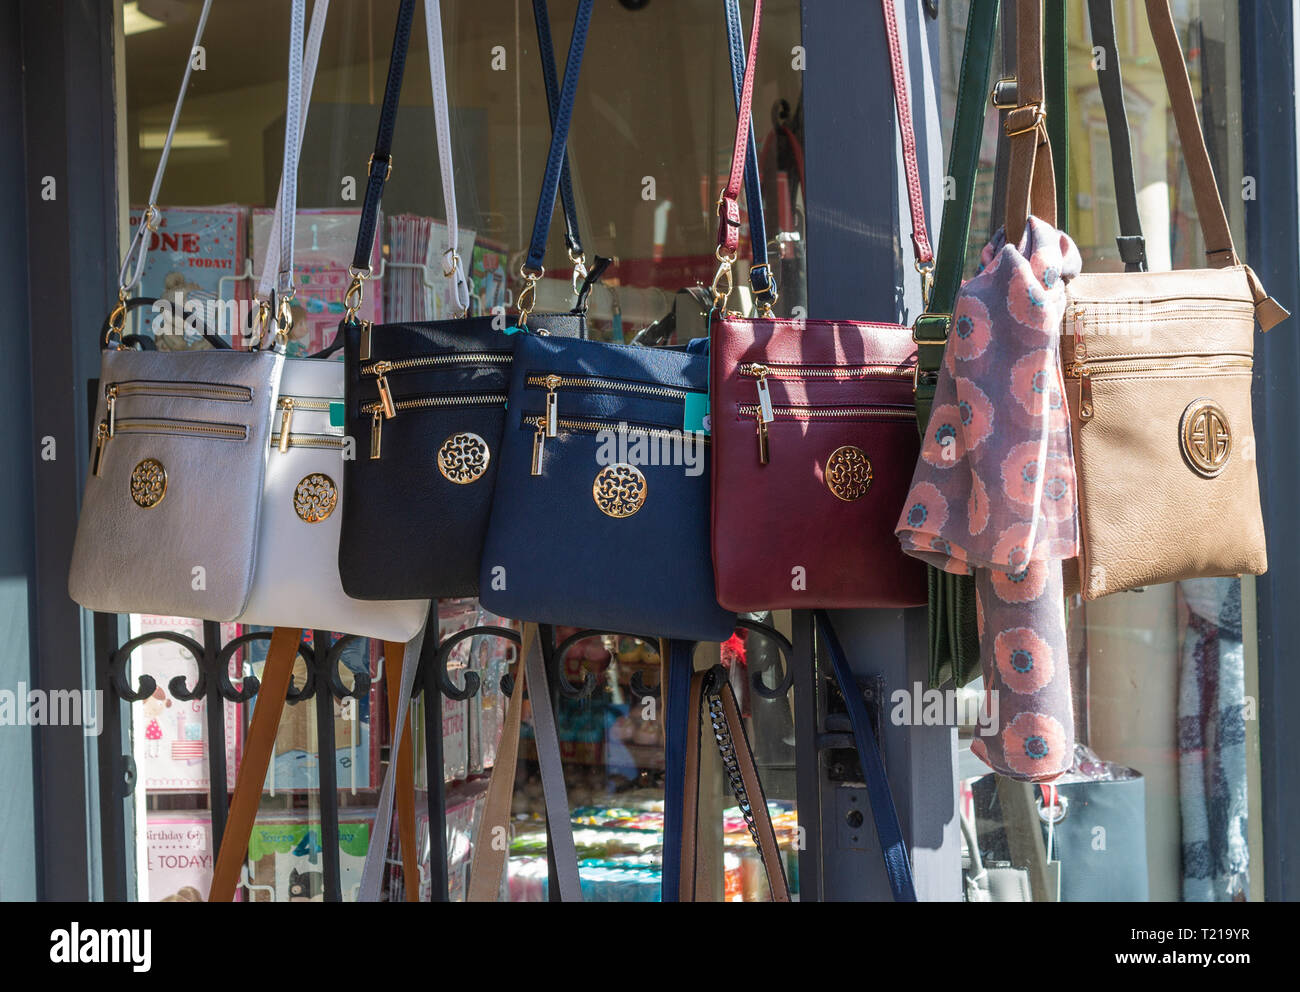 leather handbags hanging on display in shop window. Stock Photo